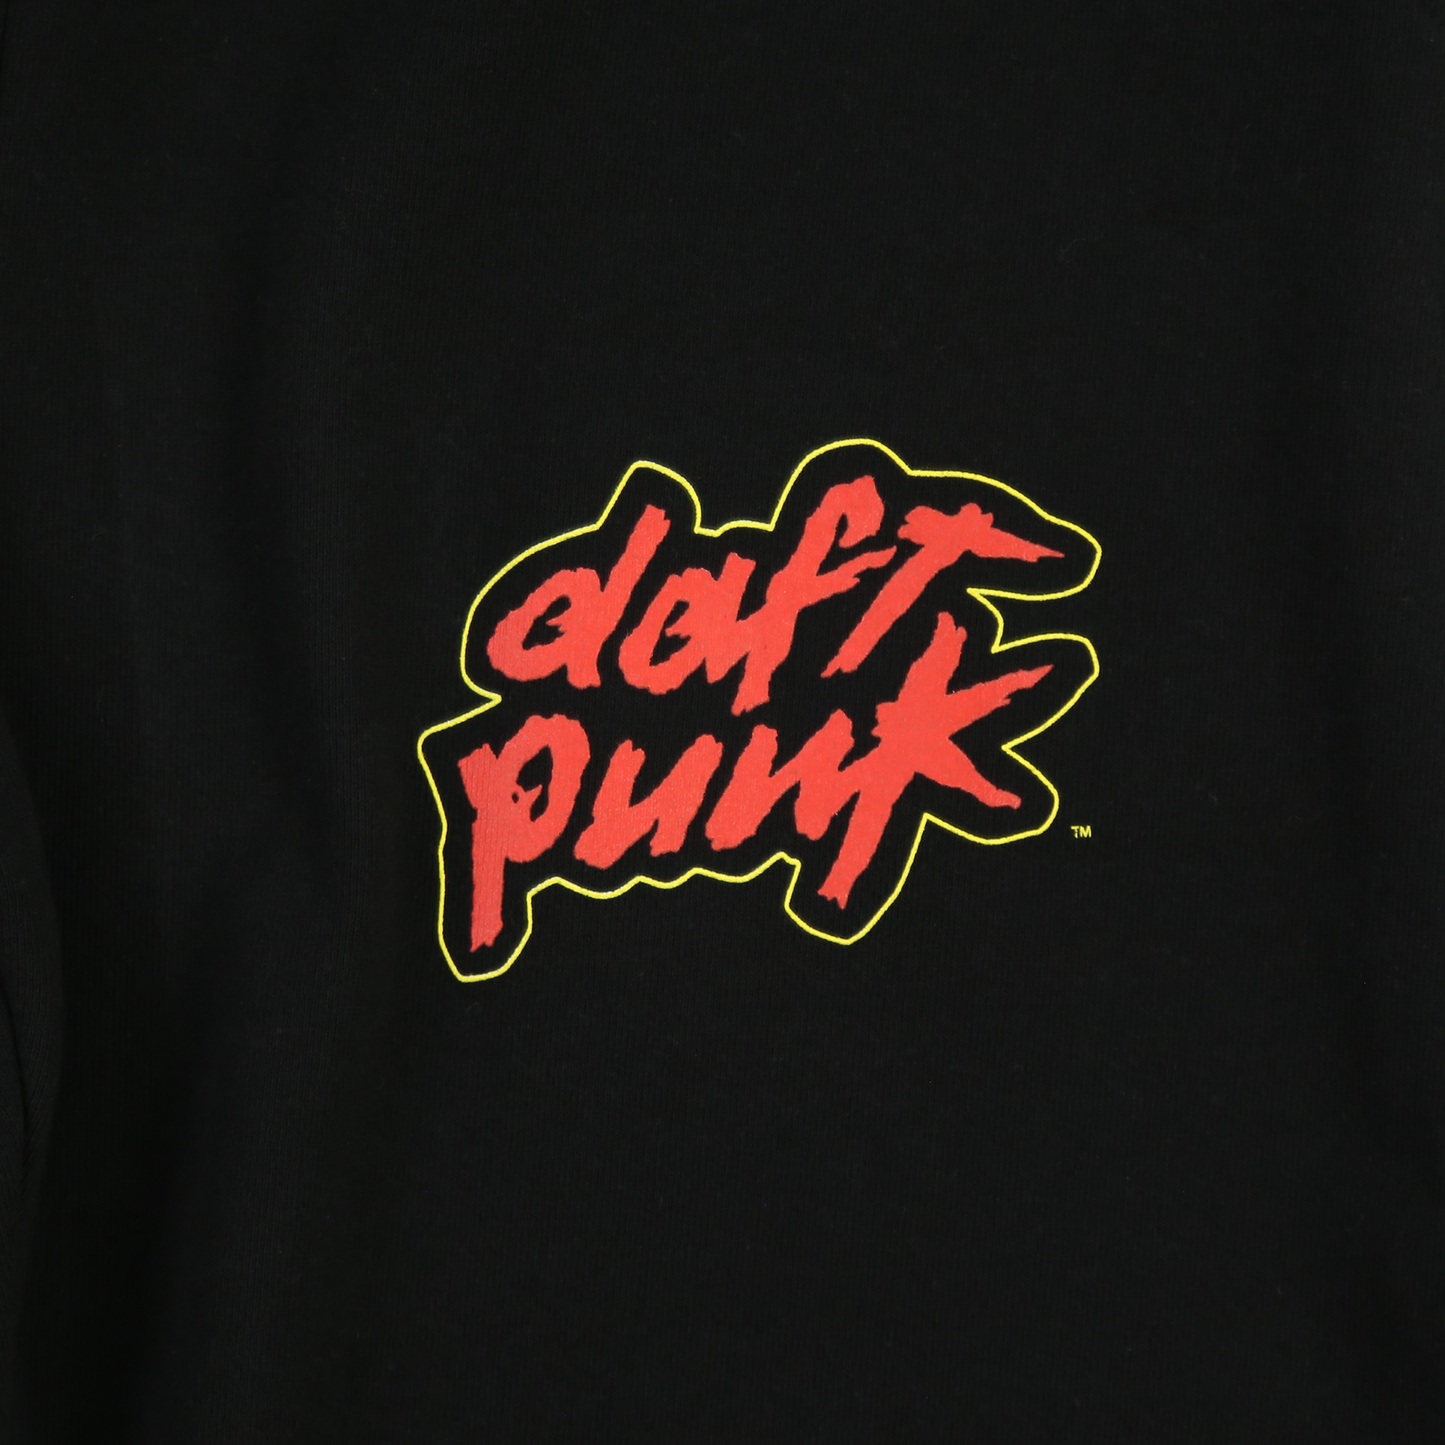 Classic Daft Punk Logo Black Tee